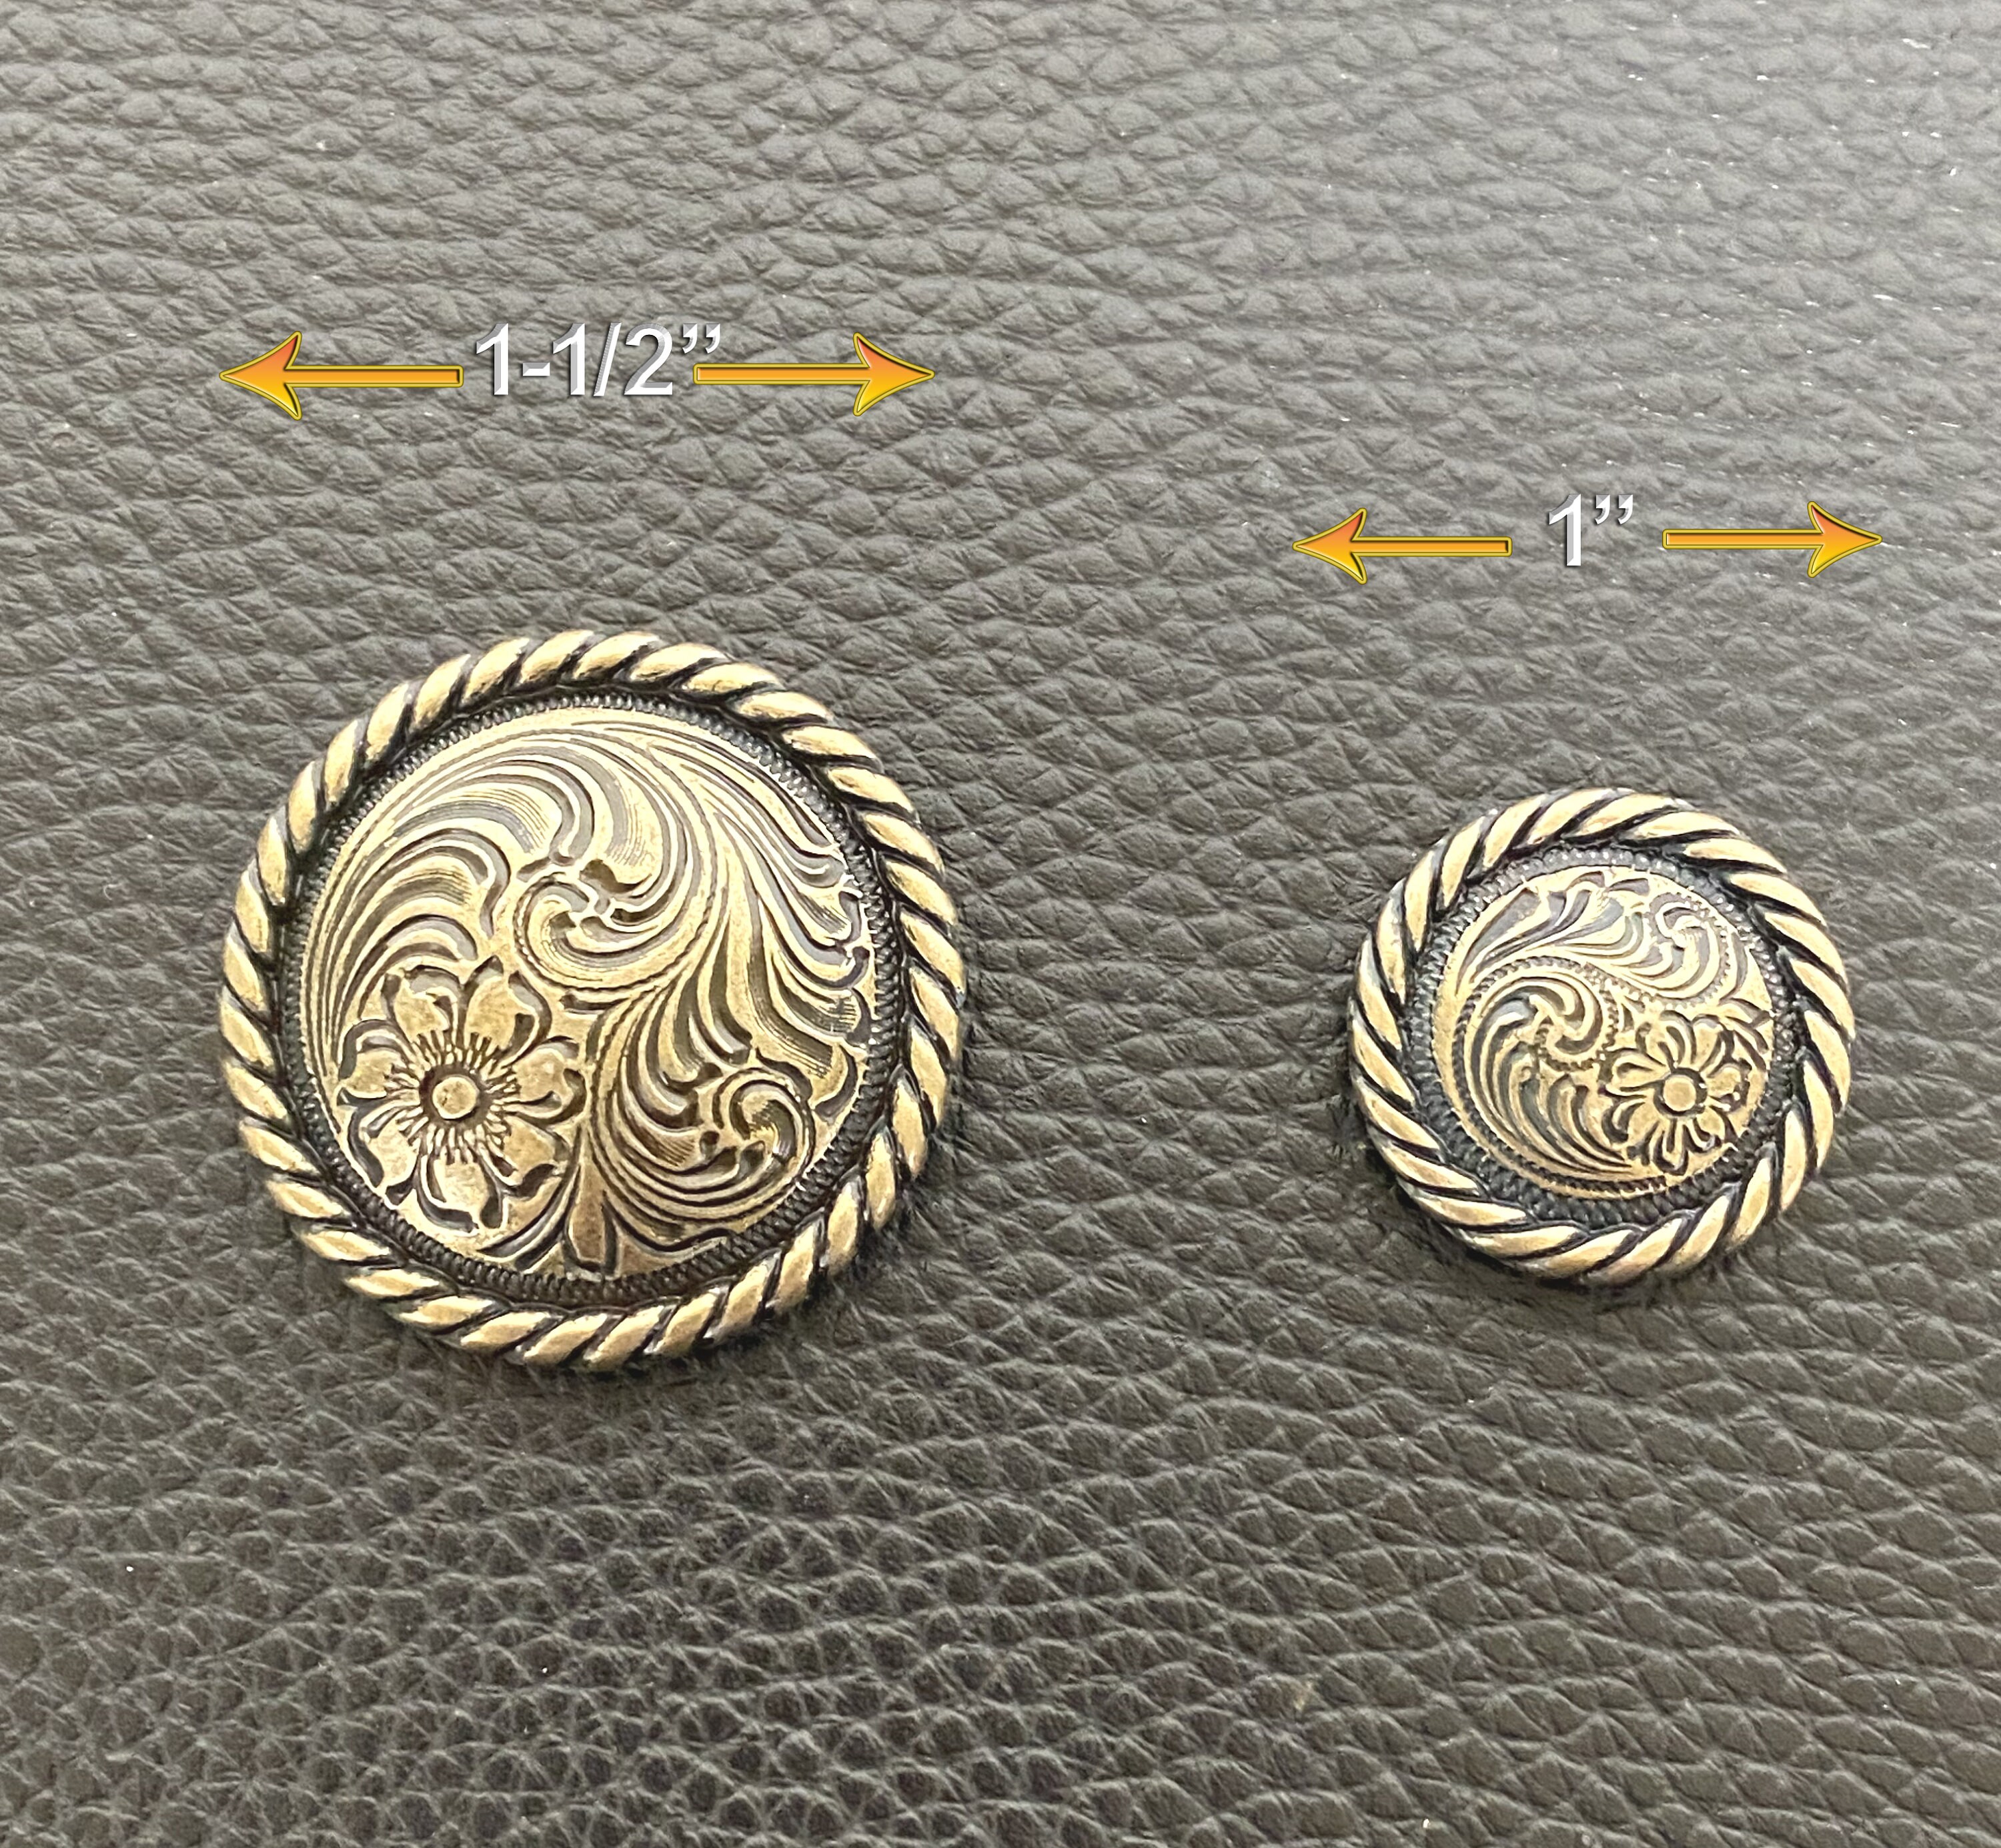 Vintage Brass Saddle Harness Bridle Medallions Emblems English